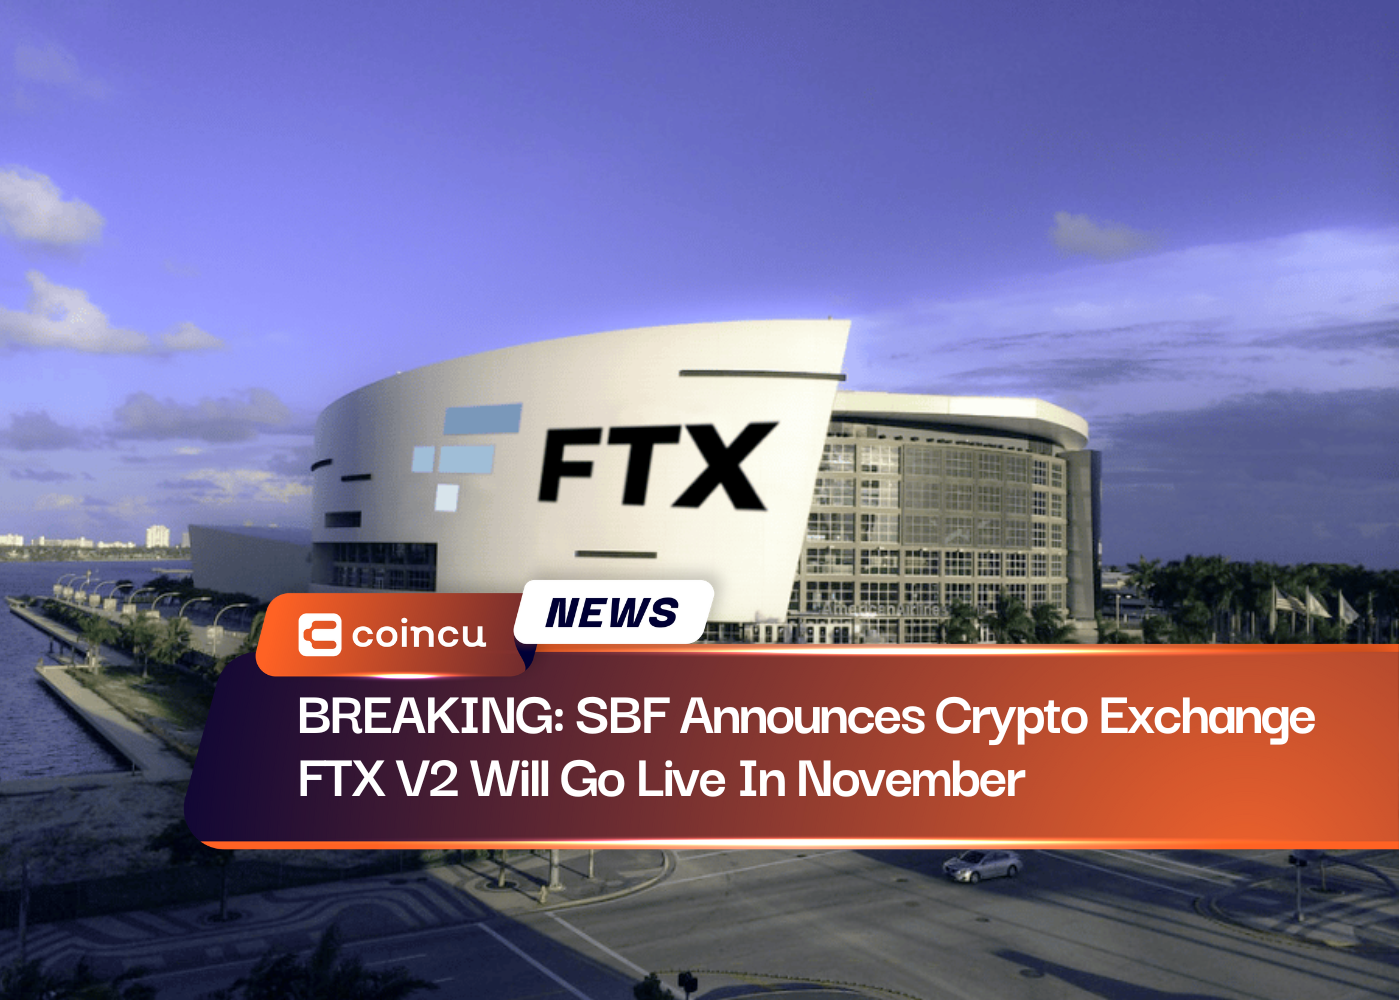 BREAKING: SBF Announces Crypto Exchange FTX V2 Will Go Live In November